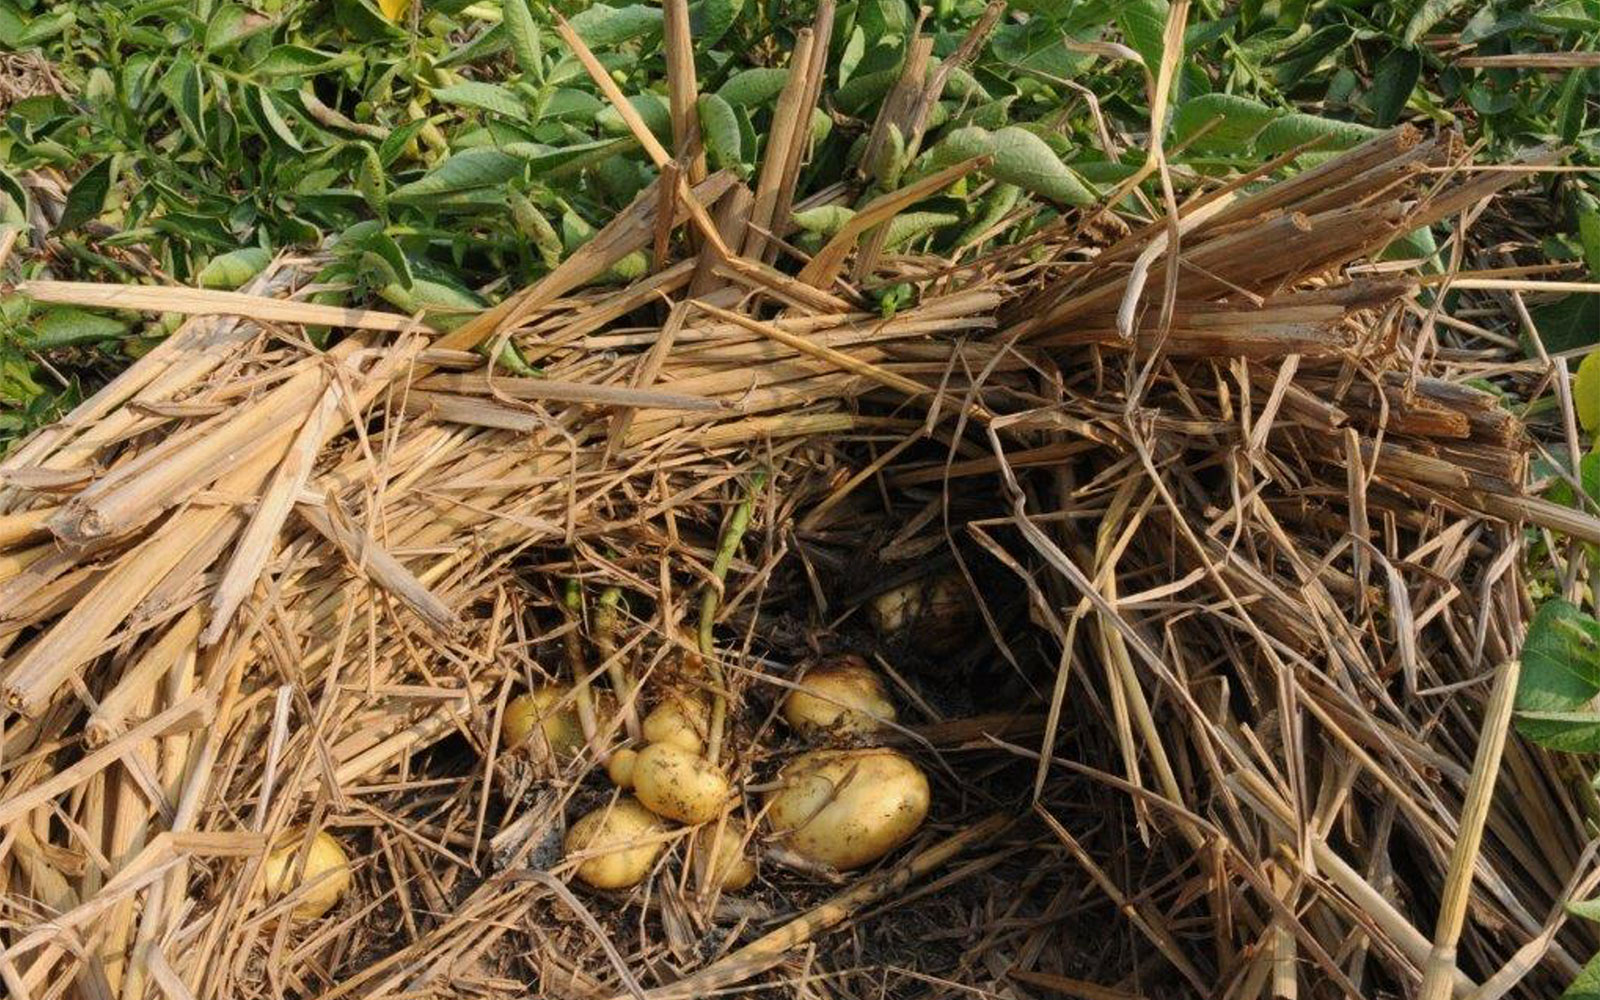 Development of potato tubers under the rice straw. Copyright: Jürgen Kroschel